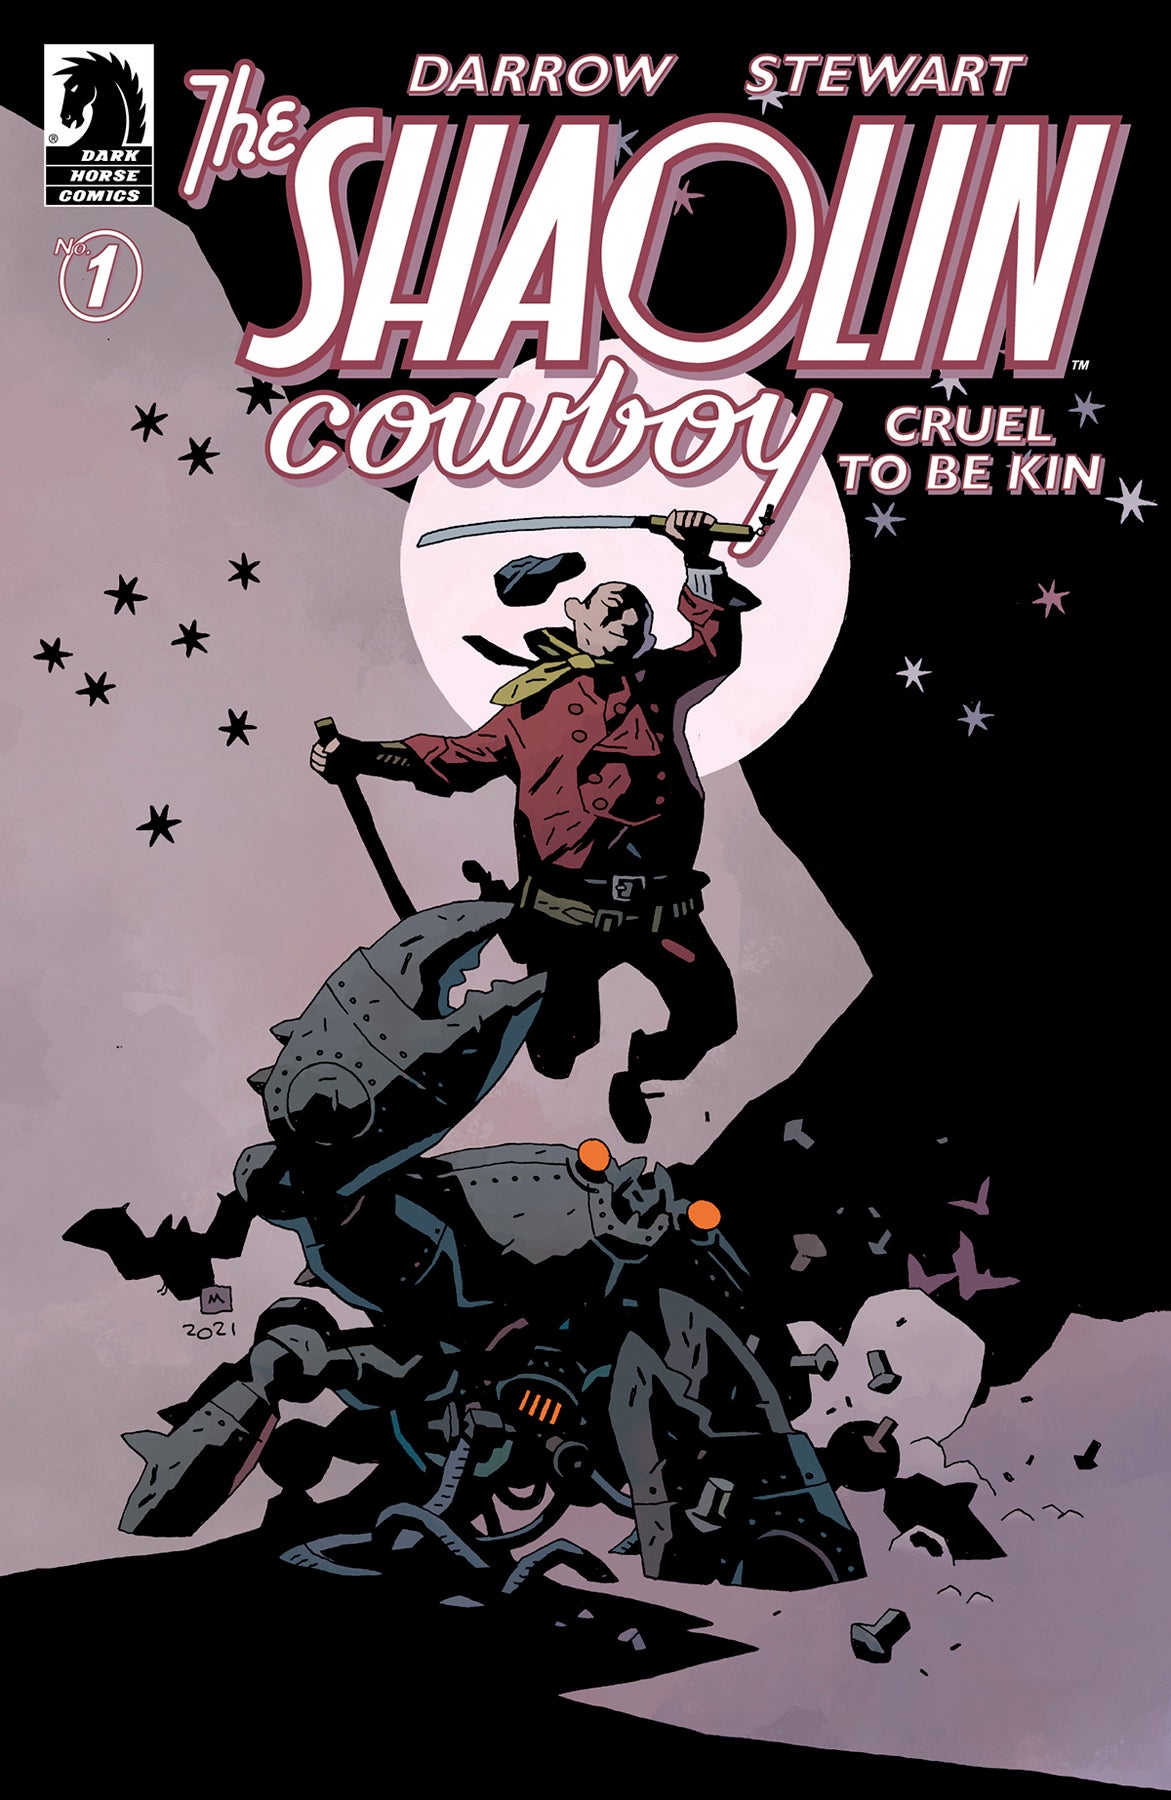 Shaolin Cowboy: Cruel to Be Kin #1 variant cover by Mike Mignola. (Image: Dark Horse Comics)